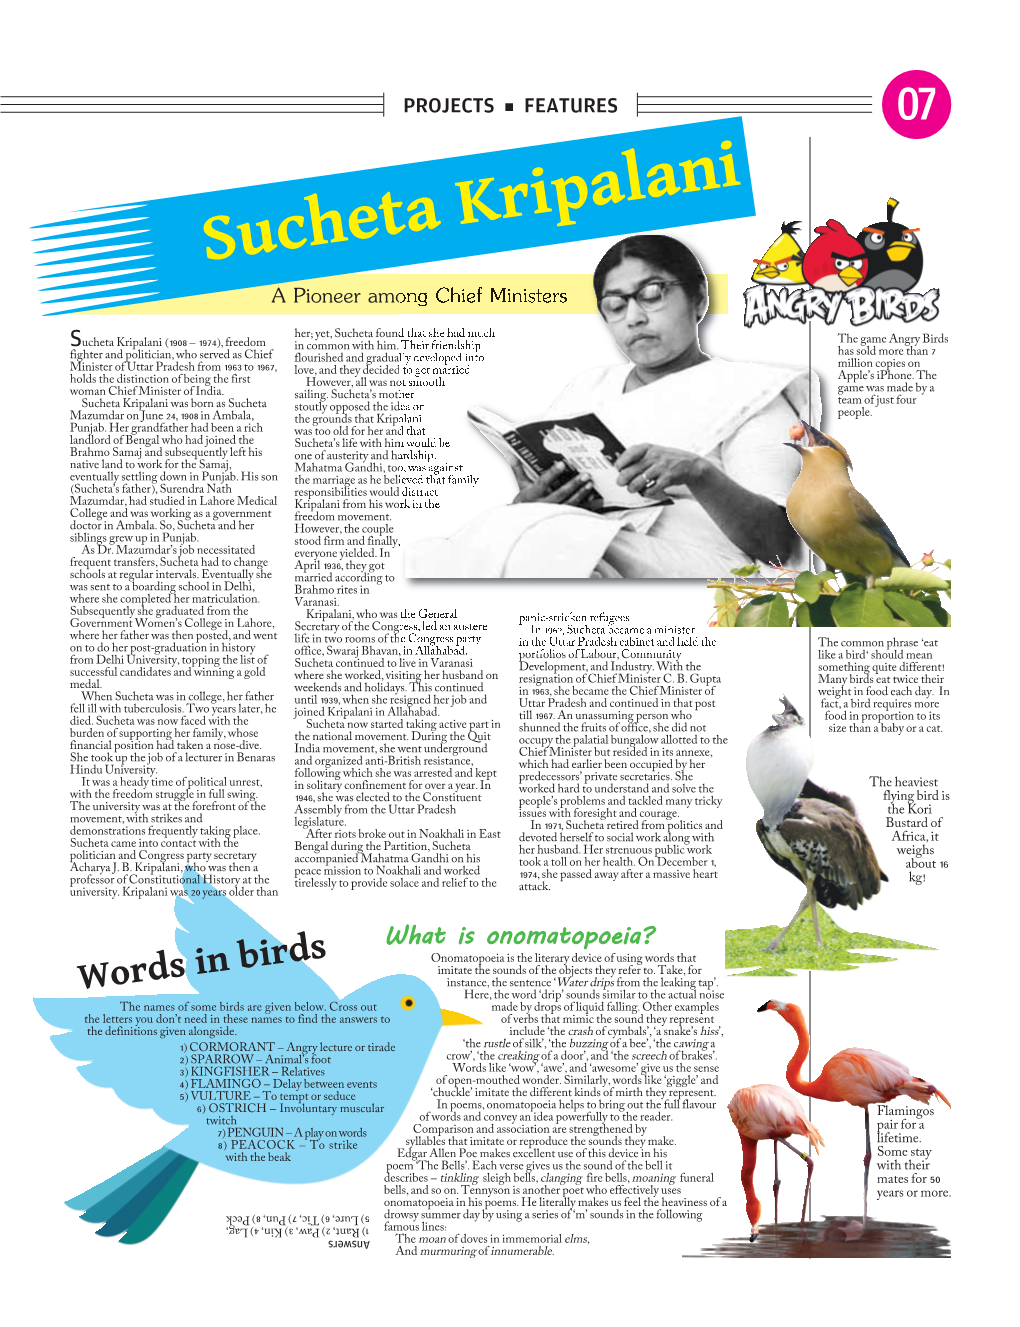 Sucheta Kripalani Was Born As Sucheta Team of Just Four Stoutly Opposed the Idea on People